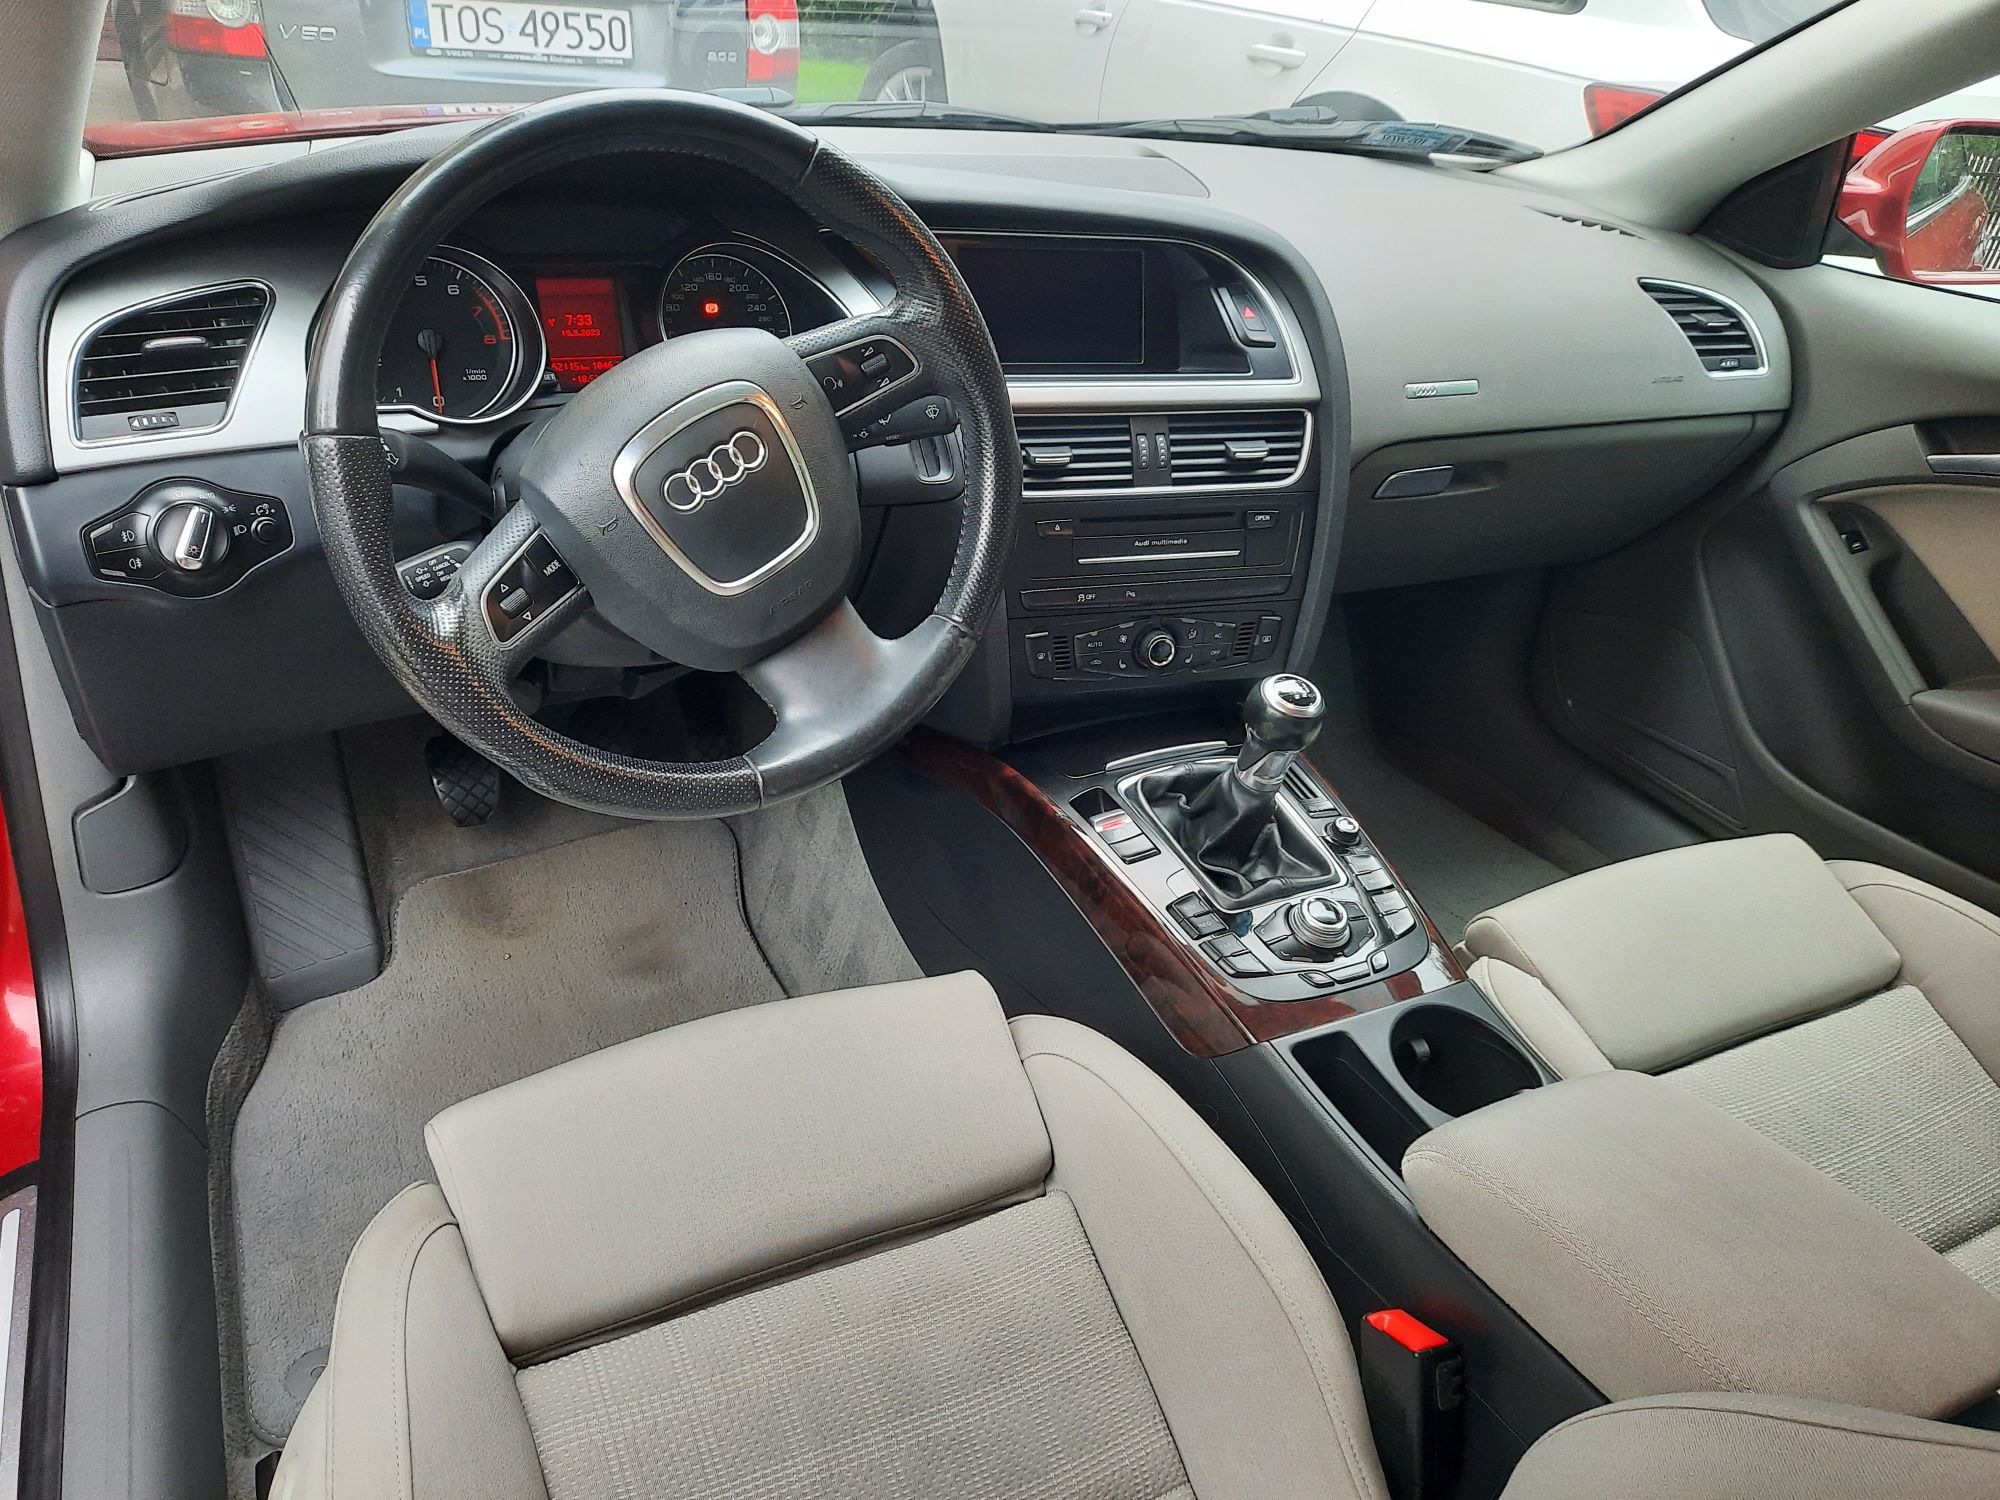 Audi a5 coupe 2.0 TFSI 180 km manual